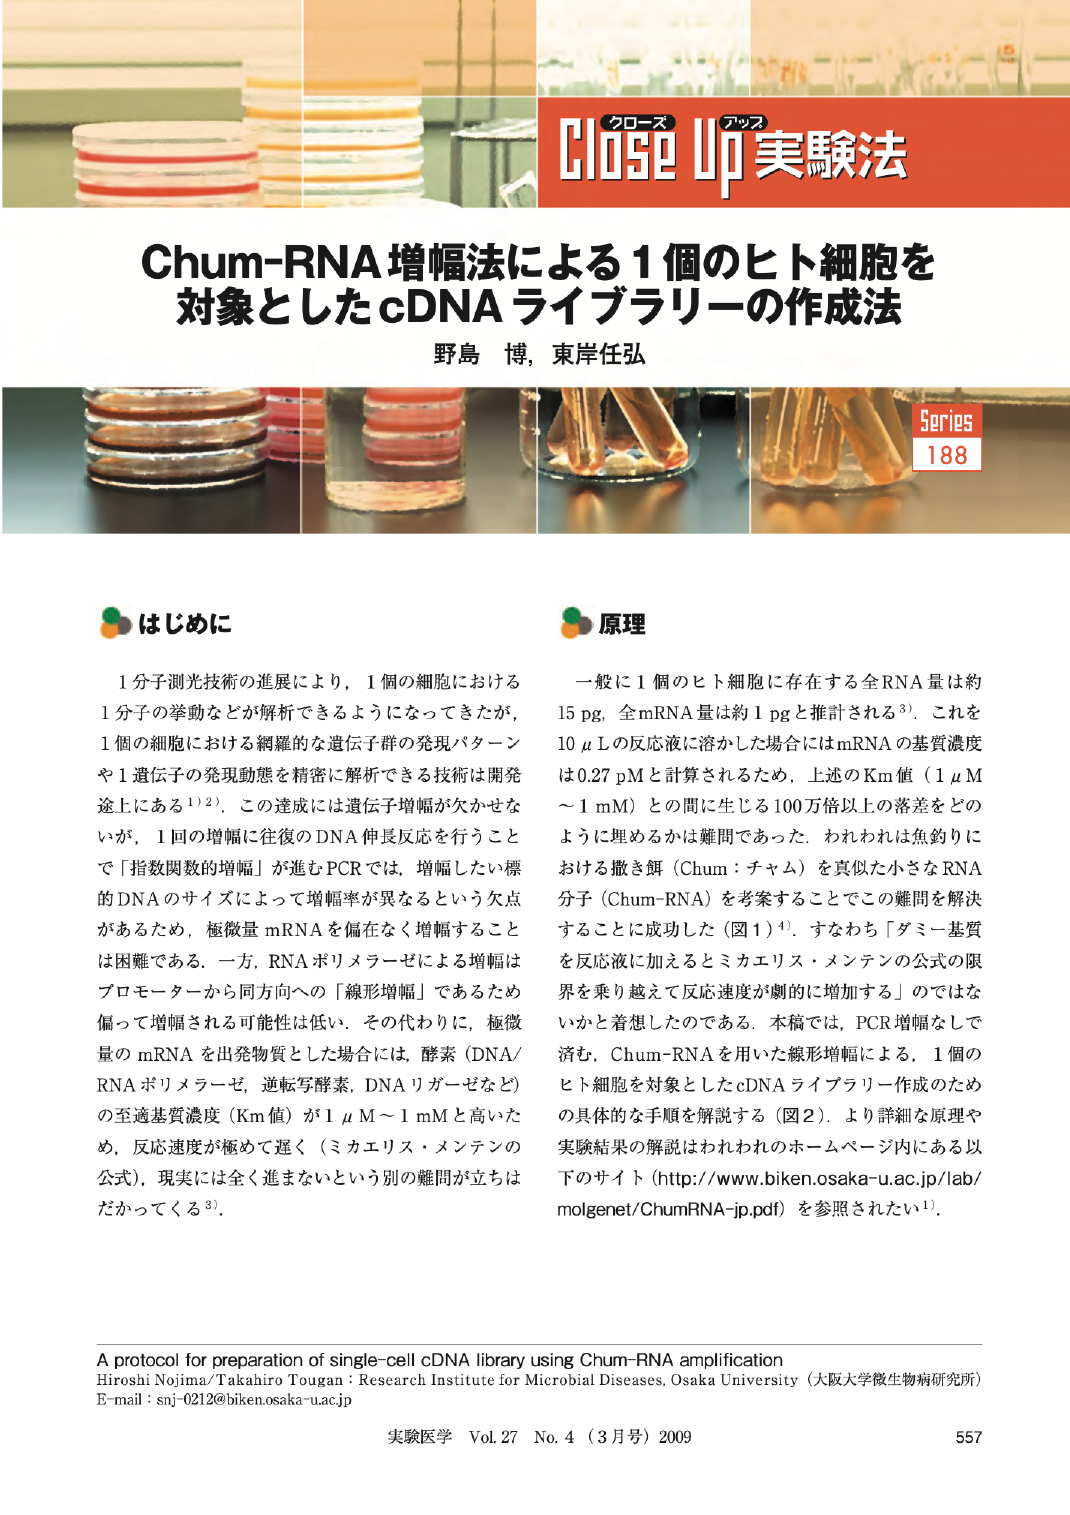 Chum-RNA増幅法による１個のヒト細胞を対象としたcDNAライブラリーの作成法